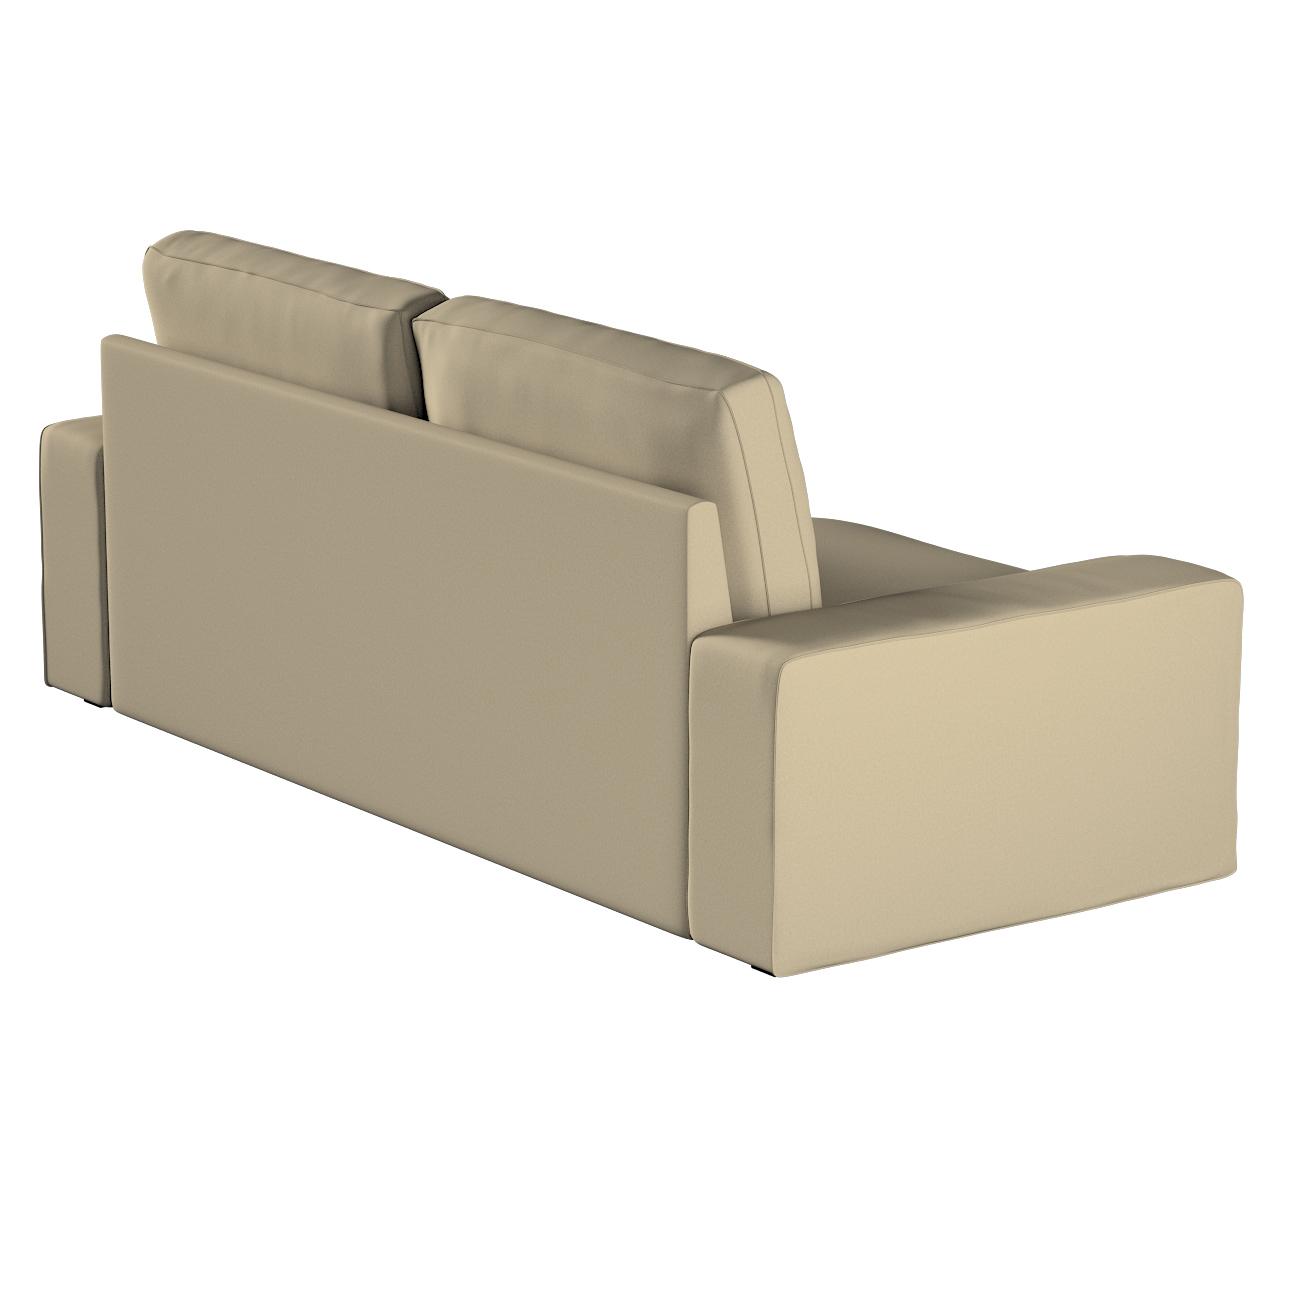 Bezug für Kivik 3-Sitzer Sofa, dunkelbeige, Bezug für Sofa Kivik 3-Sitzer, günstig online kaufen